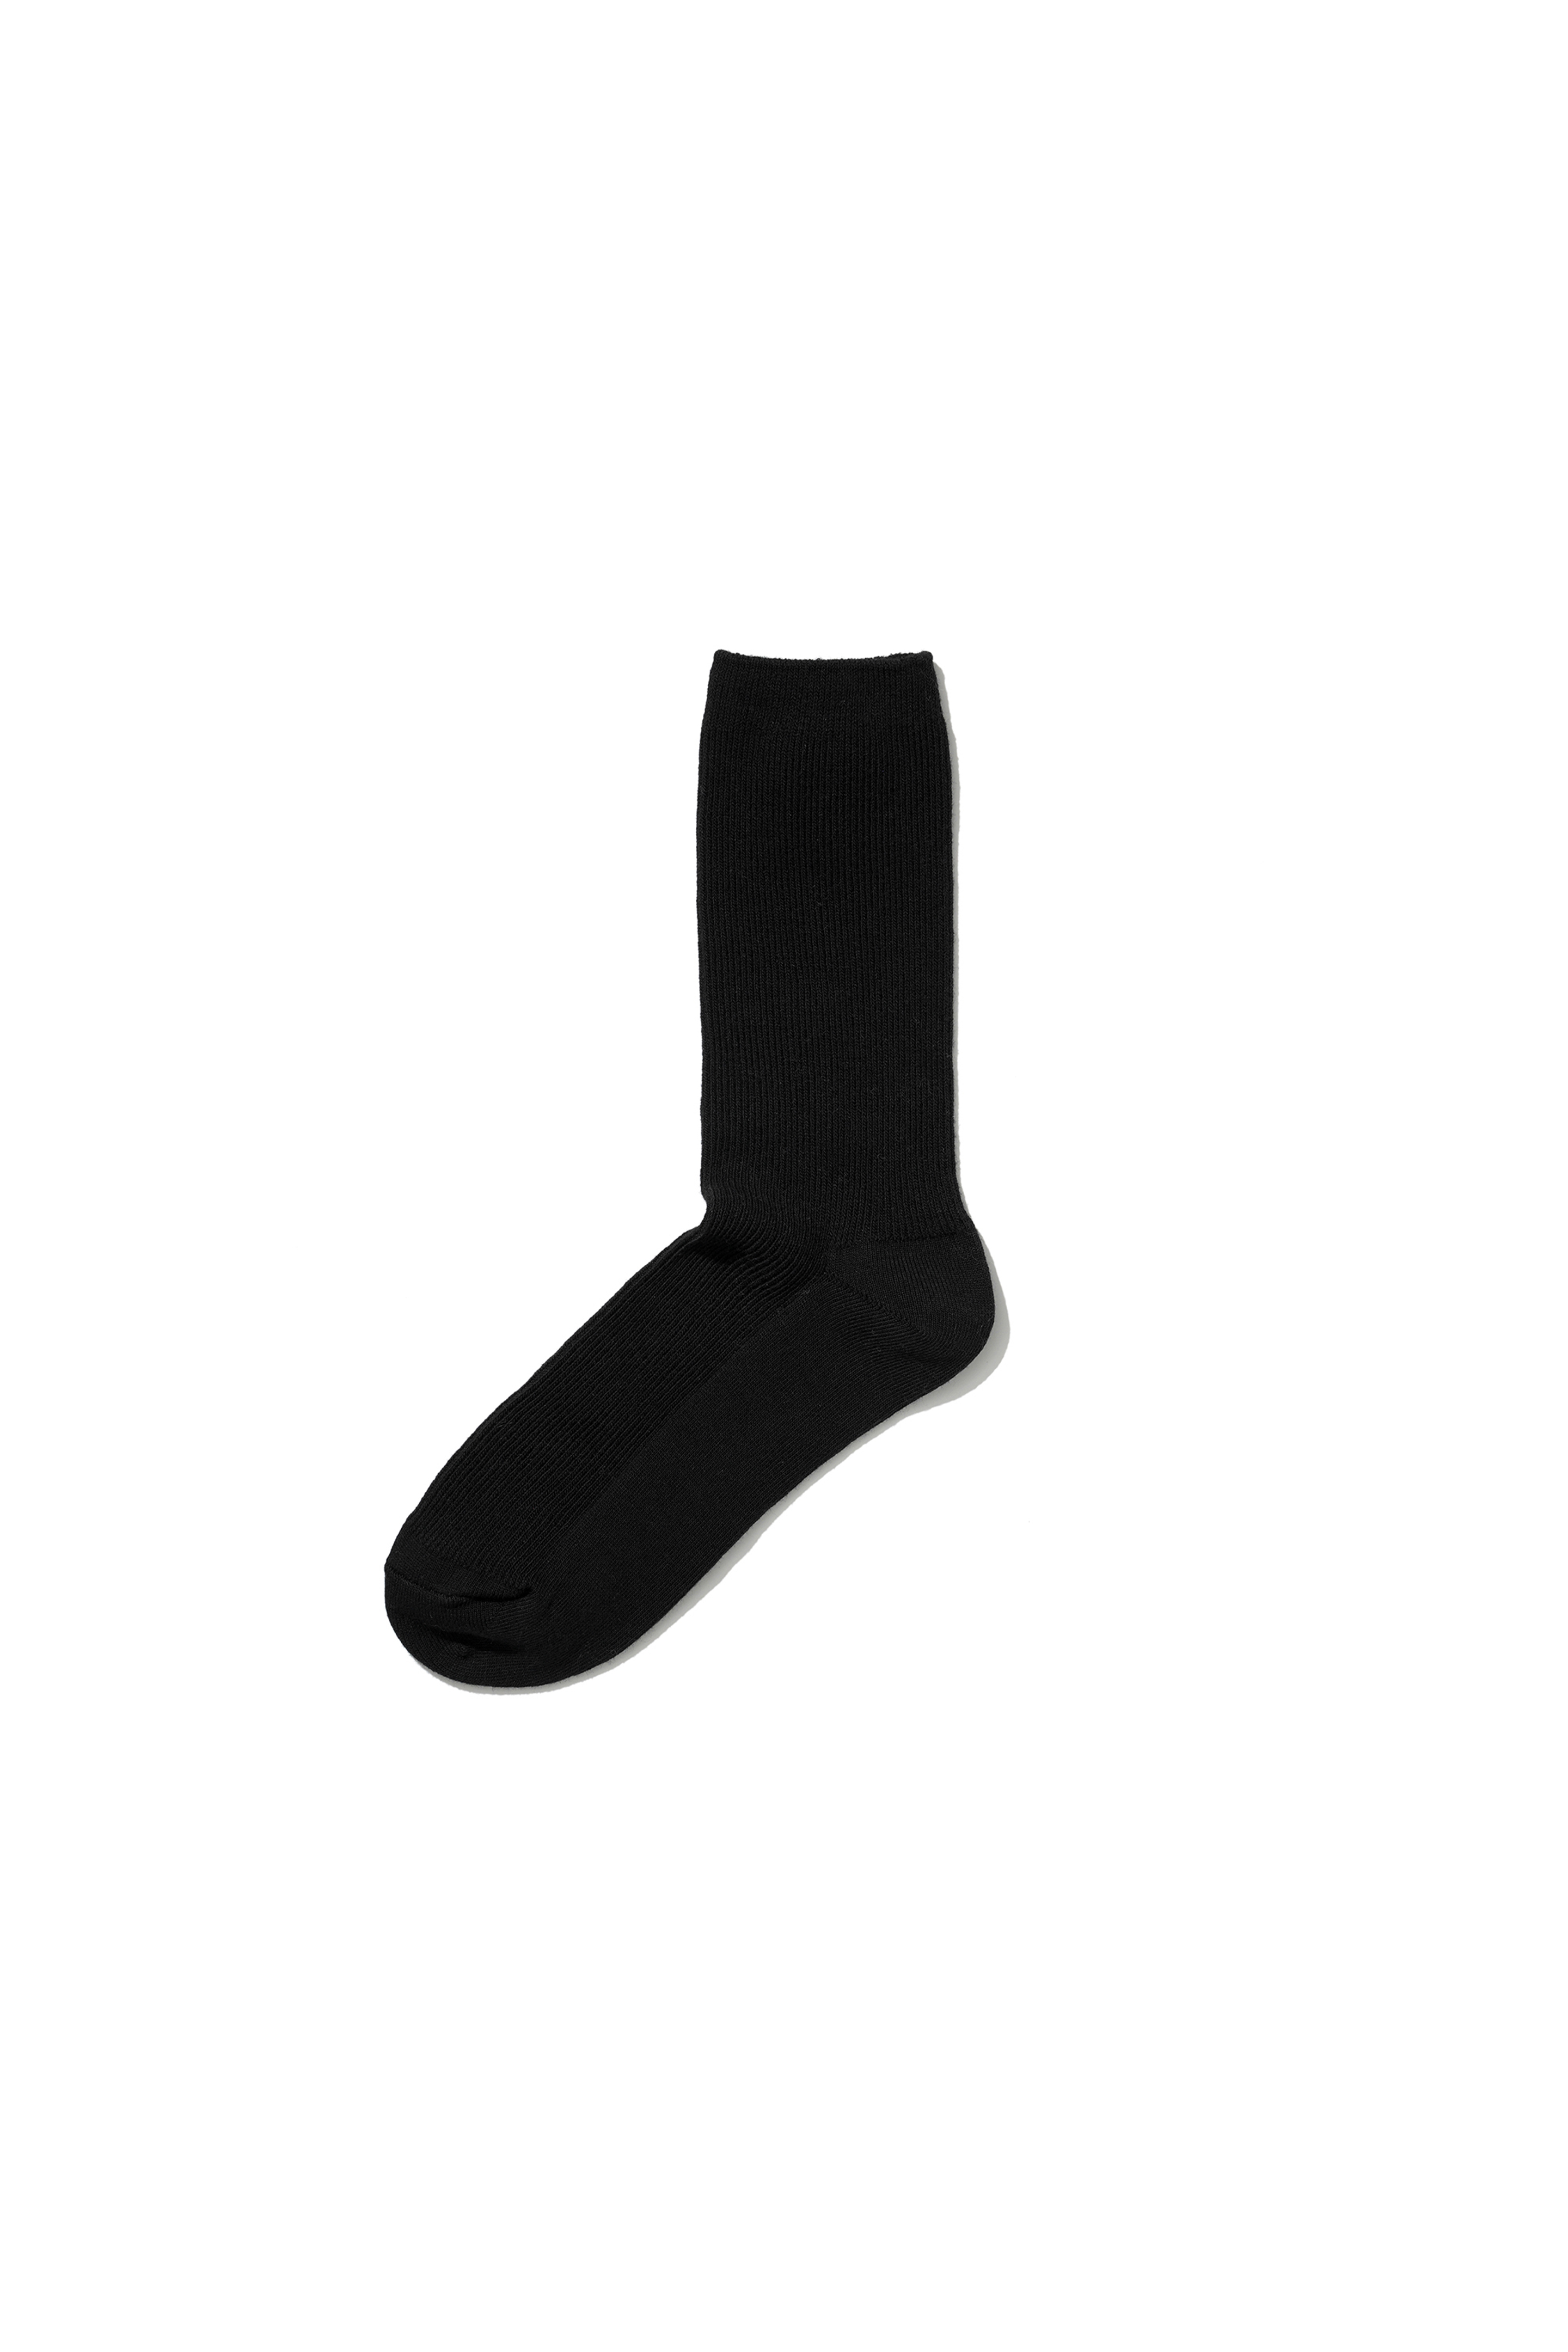 (Exclusive) Essential Socks Black